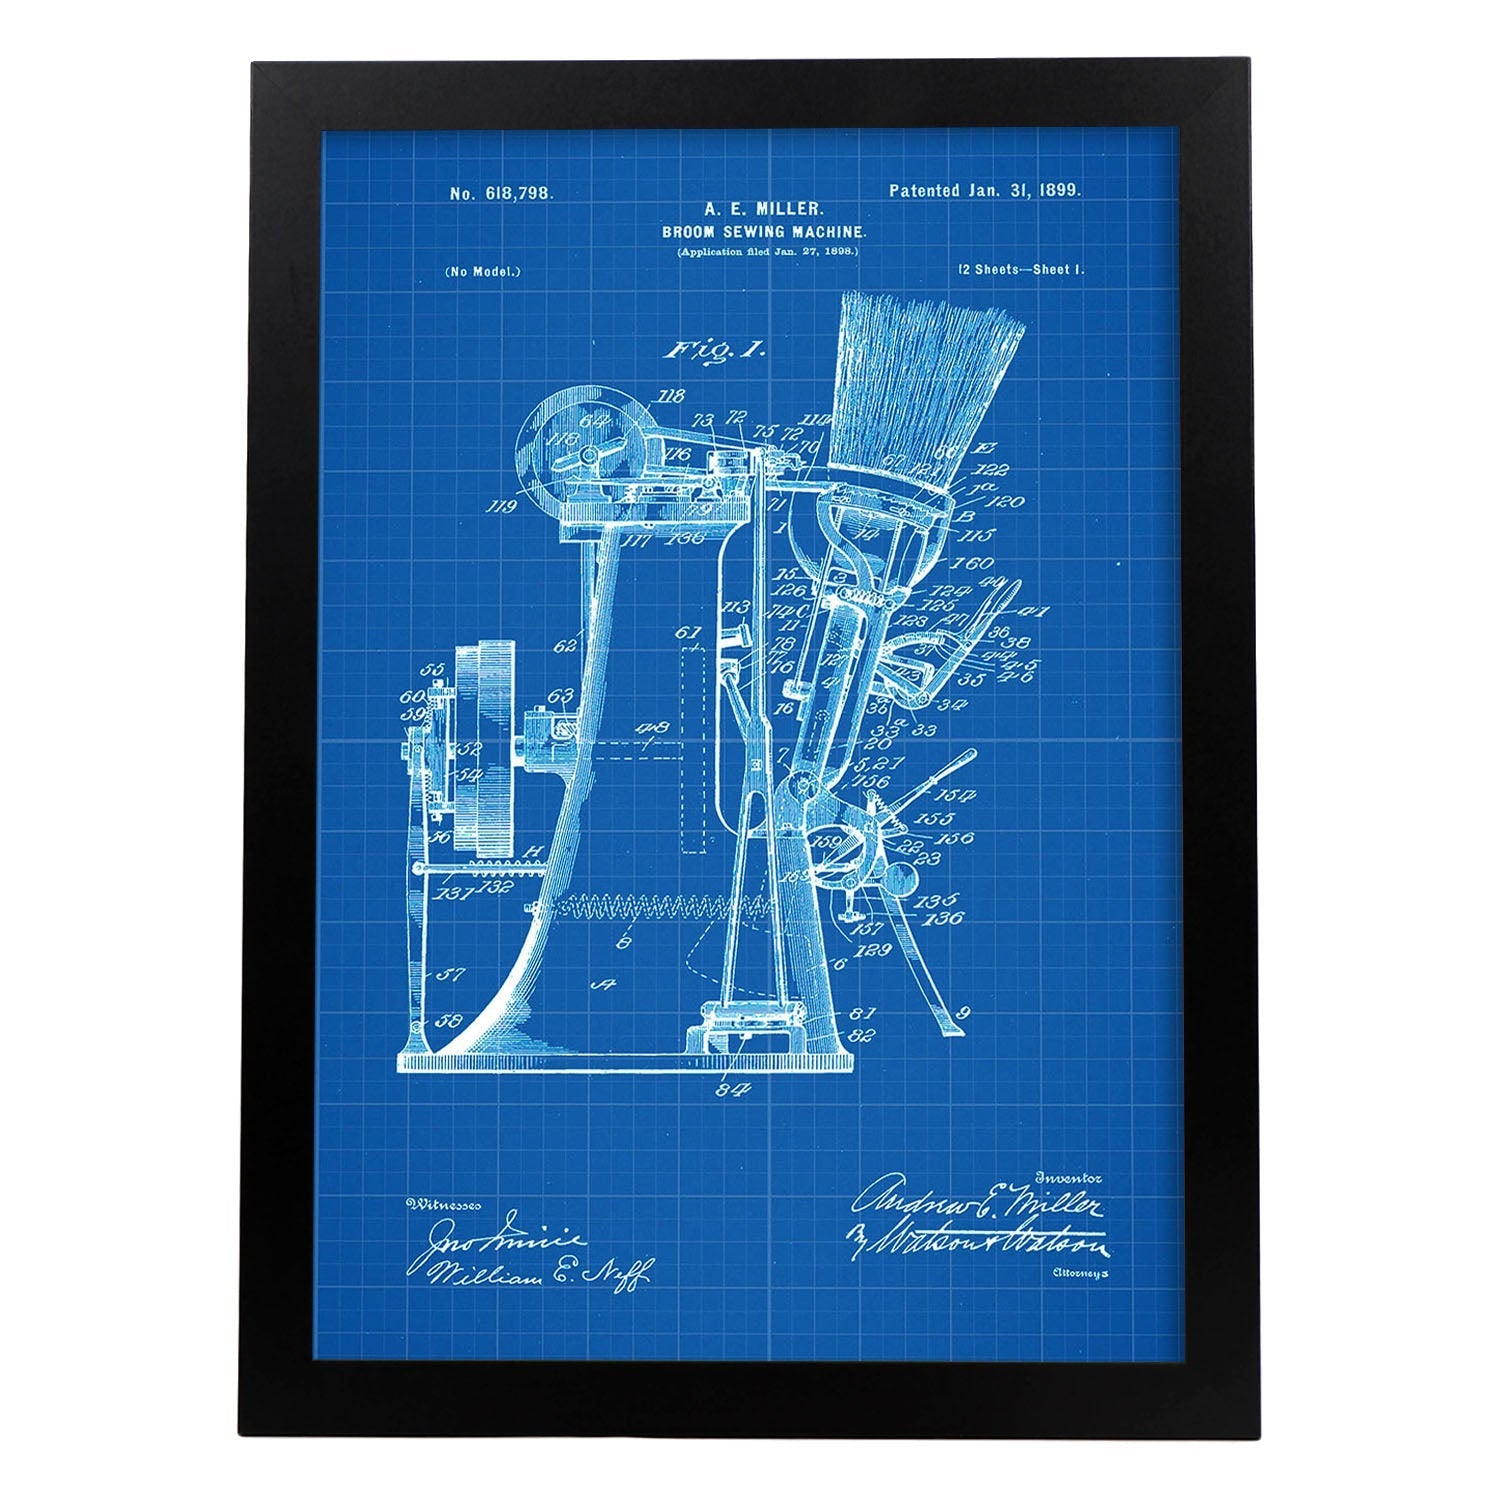 Poster con patente de Maquina de coser escobas. Lámina con diseño de patente antigua-Artwork-Nacnic-A4-Marco Negro-Nacnic Estudio SL